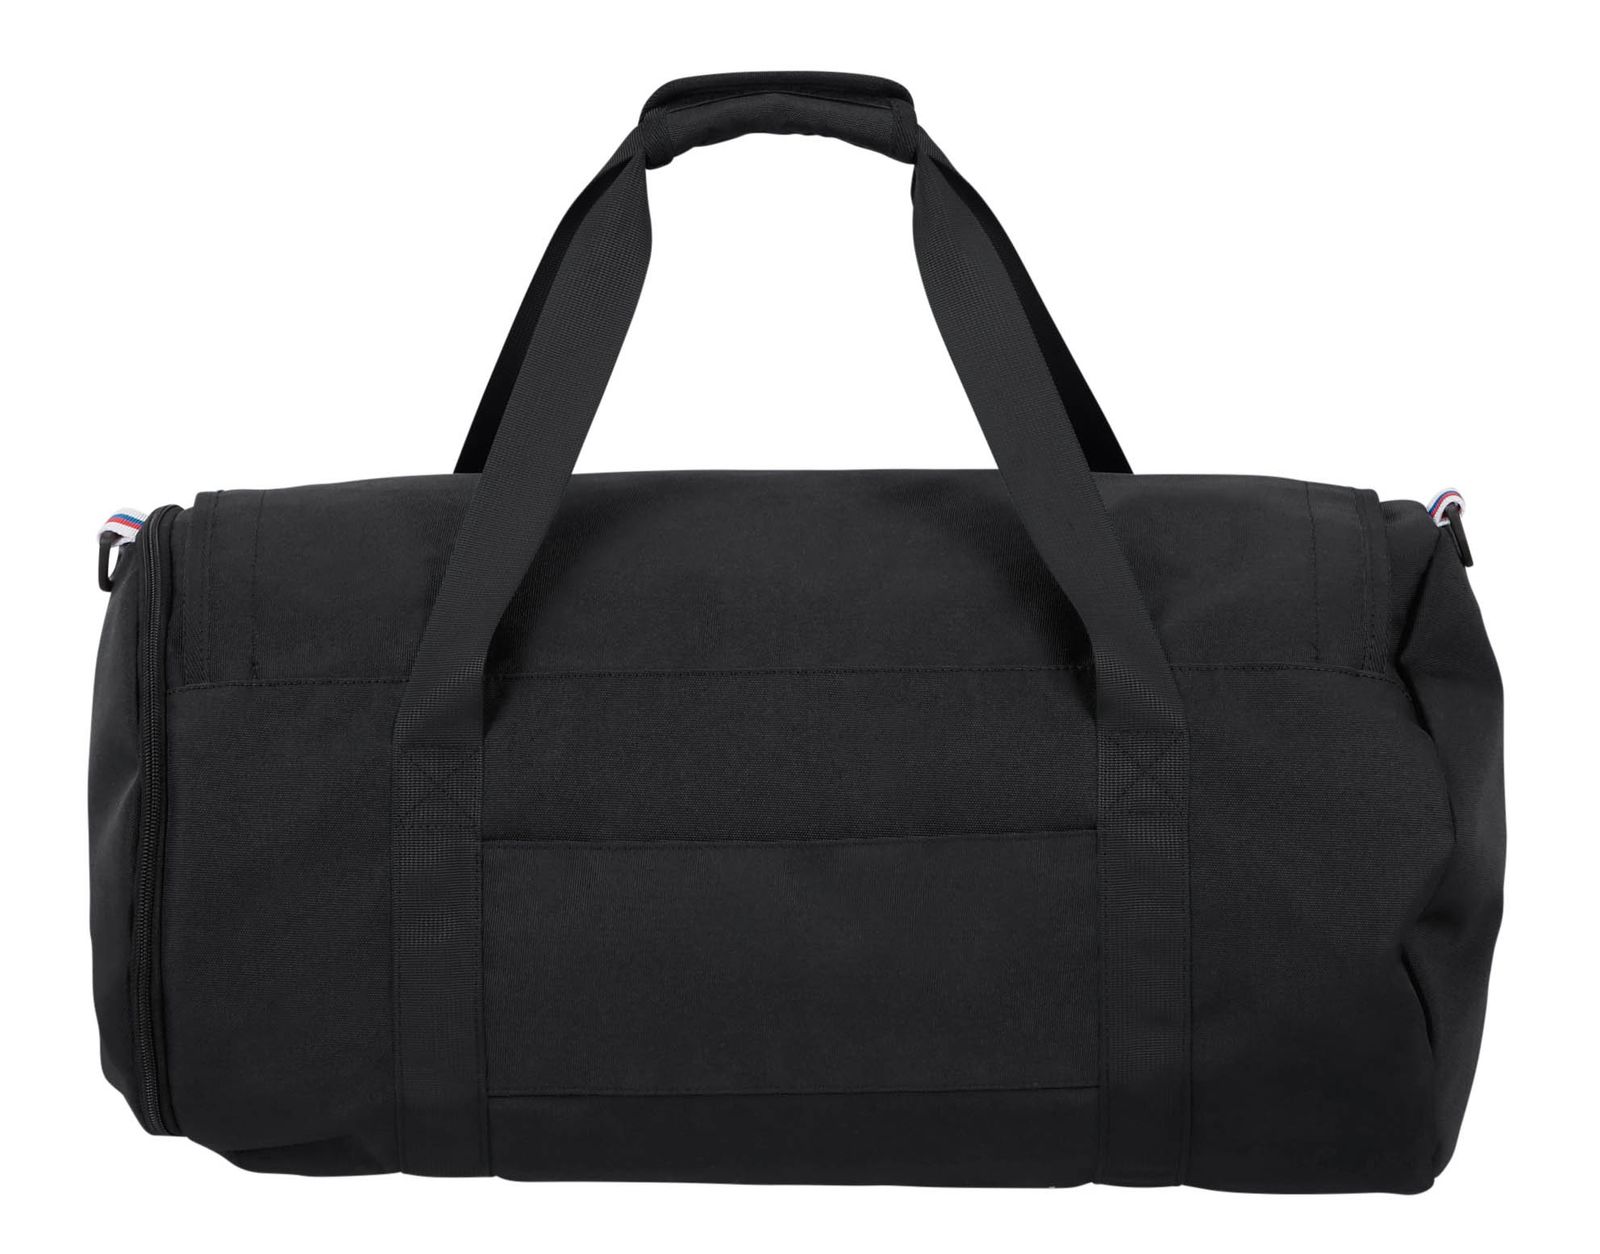 American Tourister Duffle Zip Black | Buy bags, purses & accessories ...